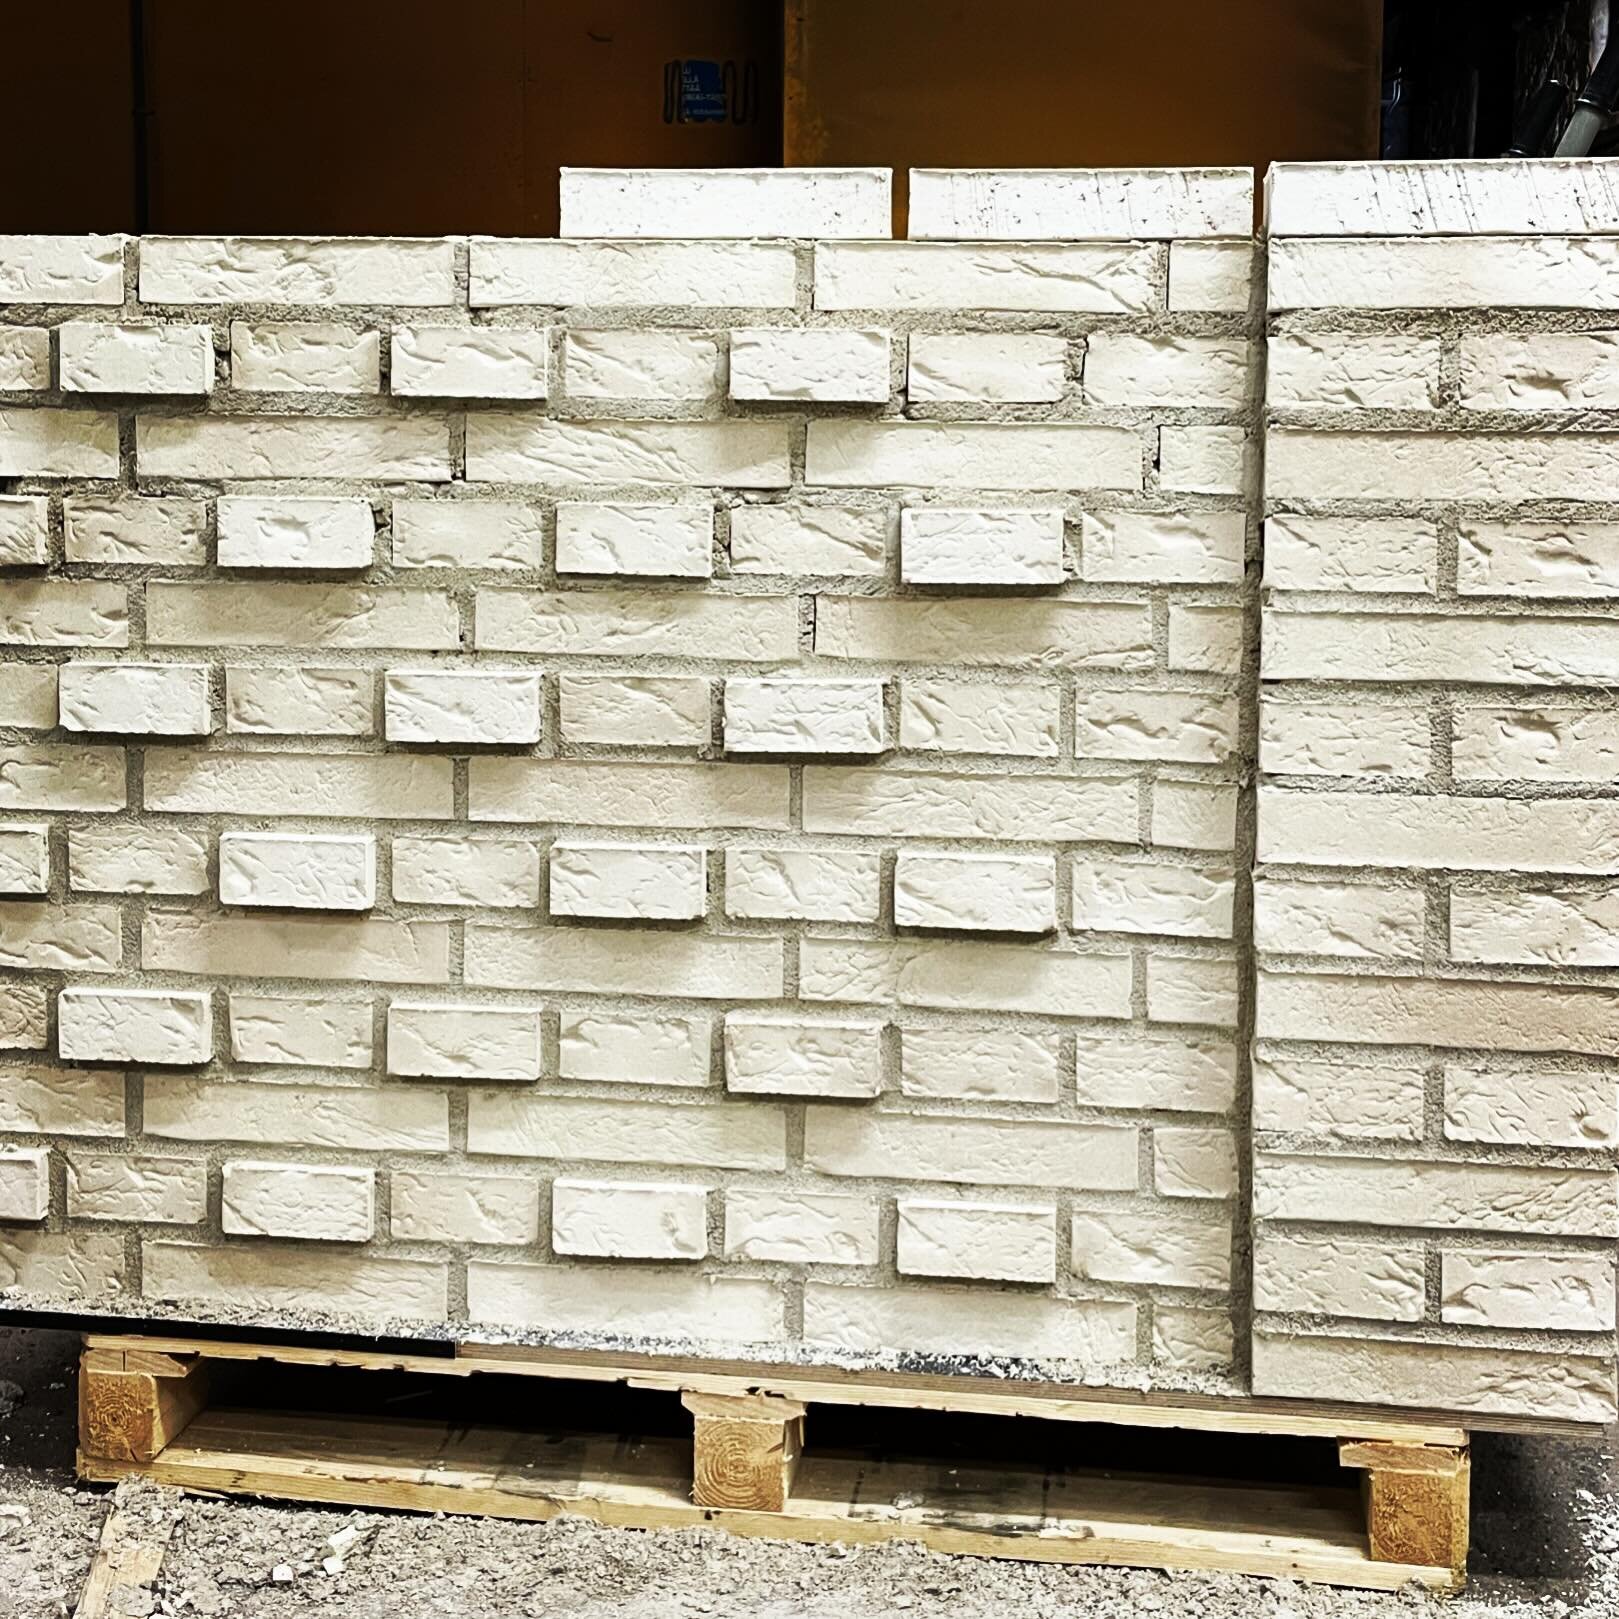 Brickwall study for @hoas_fi buidling&rsquo;s facade in Gotlanninkatu, Helsinki by @tienoarkkitehdit 
Brick &amp; brickwork by @wienerbergerfinland 
.
.
.
#tiilisein&auml; #architecture #archilovers #archidaily #brick #studenthousing #architecturedos